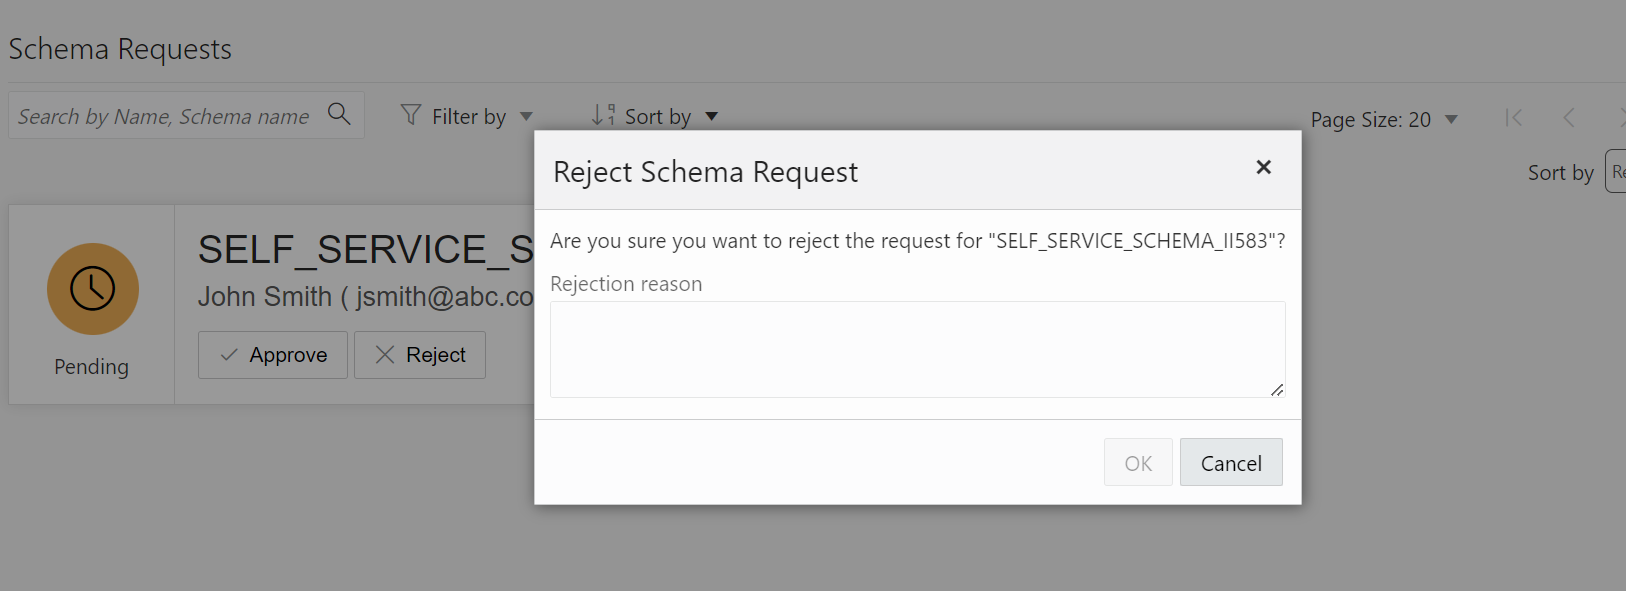 Reject Schema Request reason